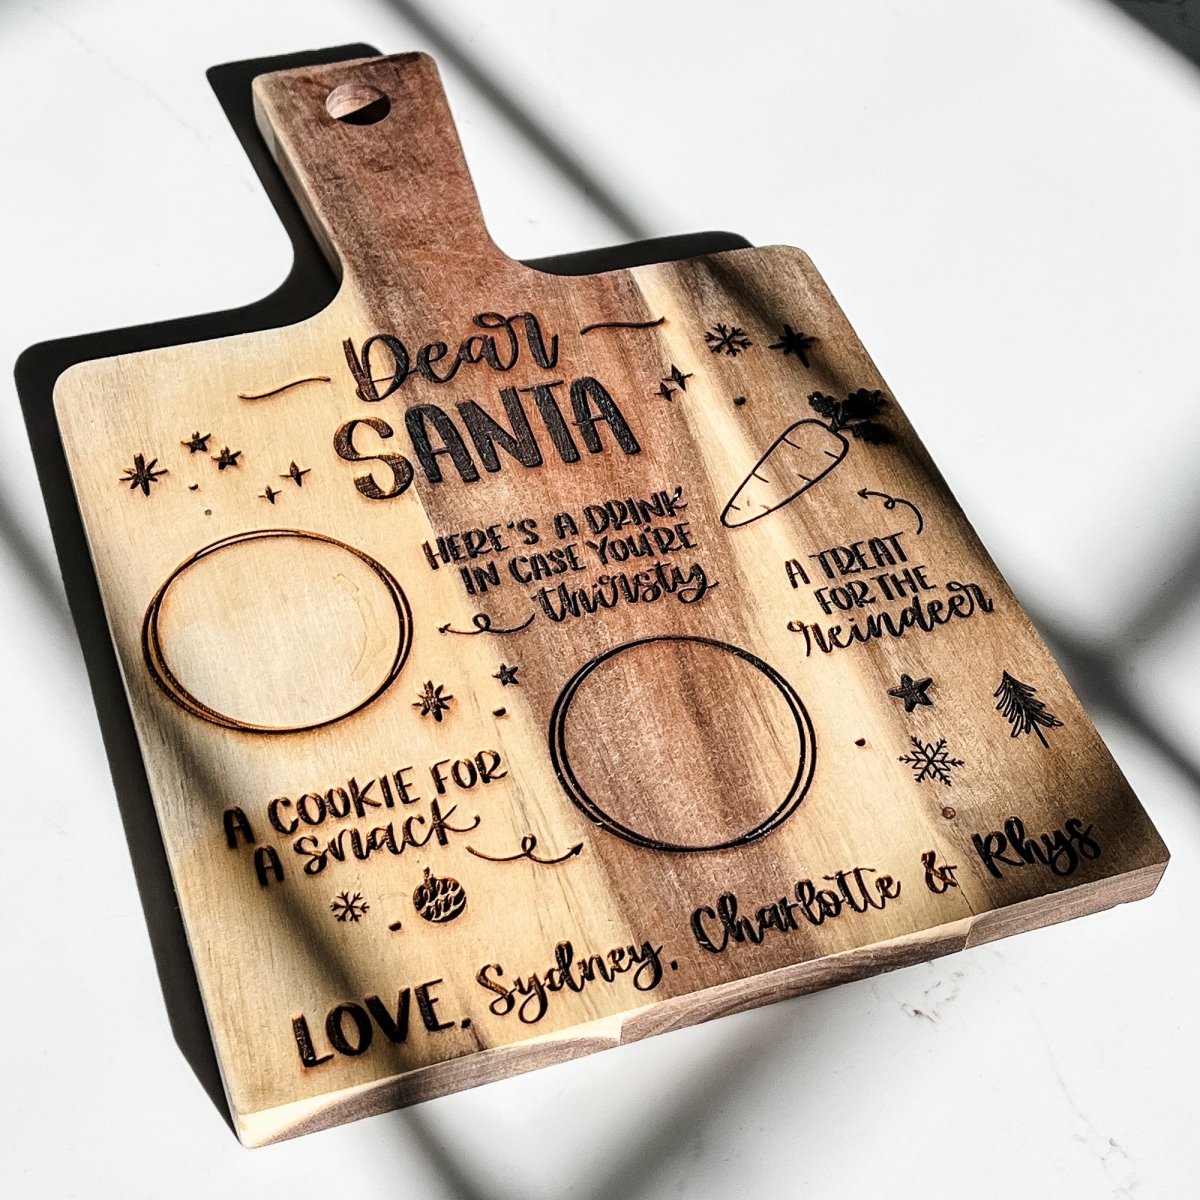 Personalized wood Santa tray cutting board - Santa treat board - sonder and wolf